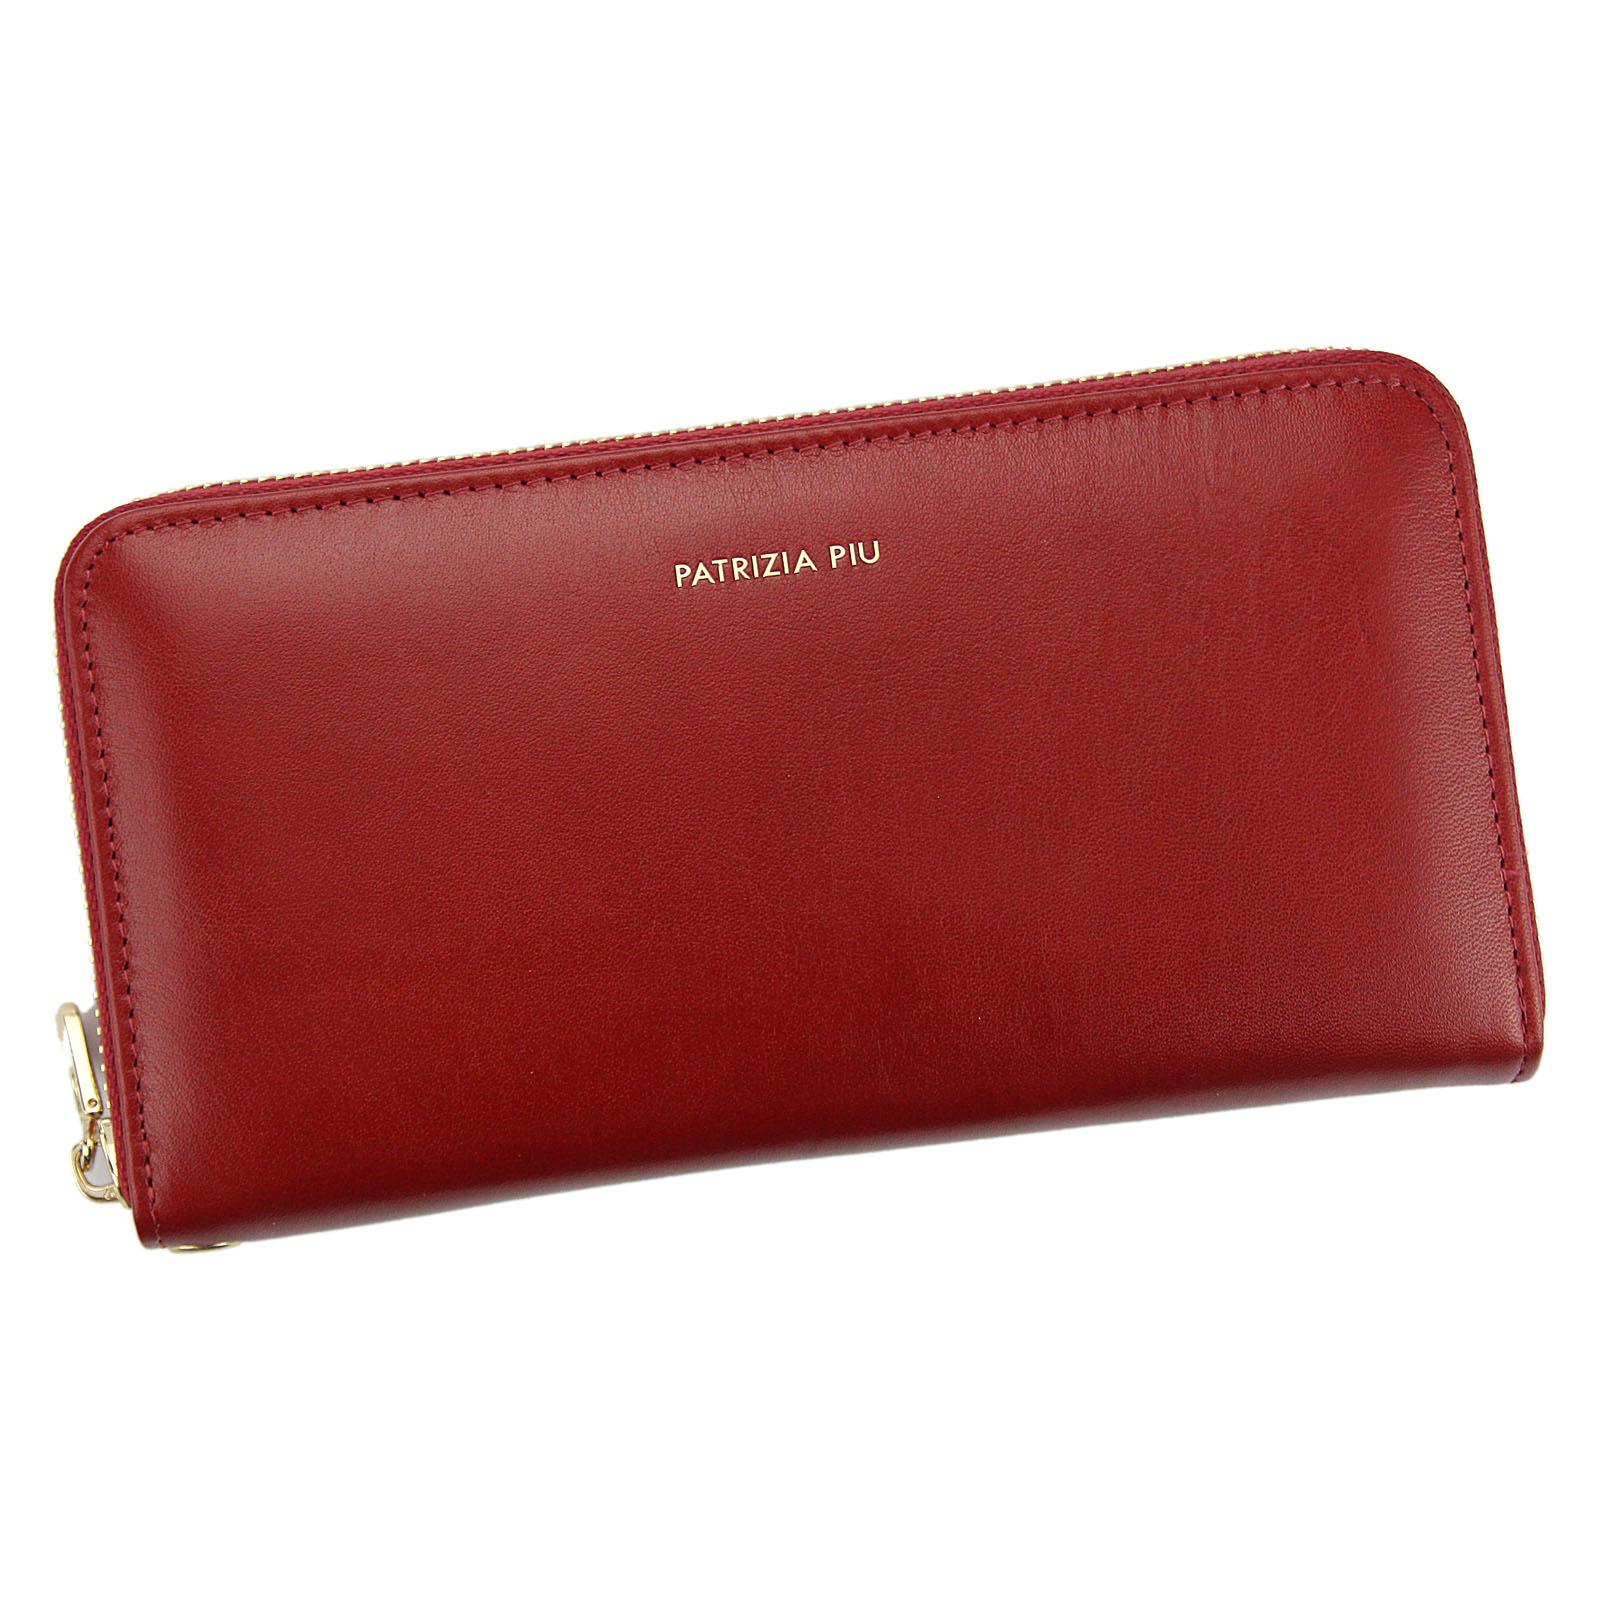 Celozipová kožená červená peněženka Patrizia Piu IT-119 + RFID